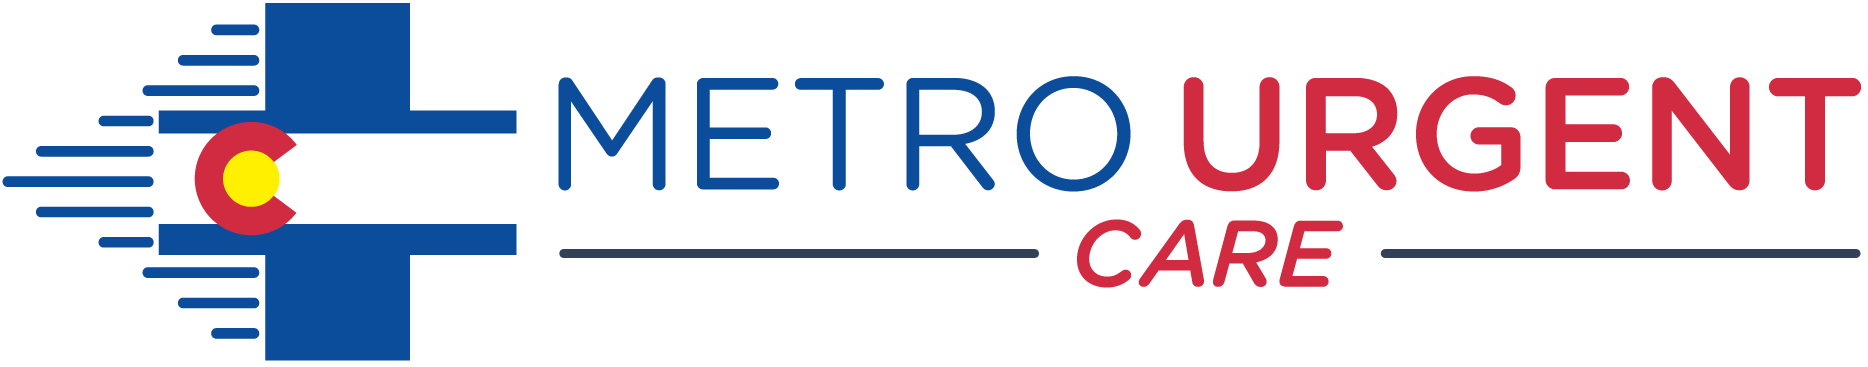 Metro Urgent Care - Hampden Ave Logo